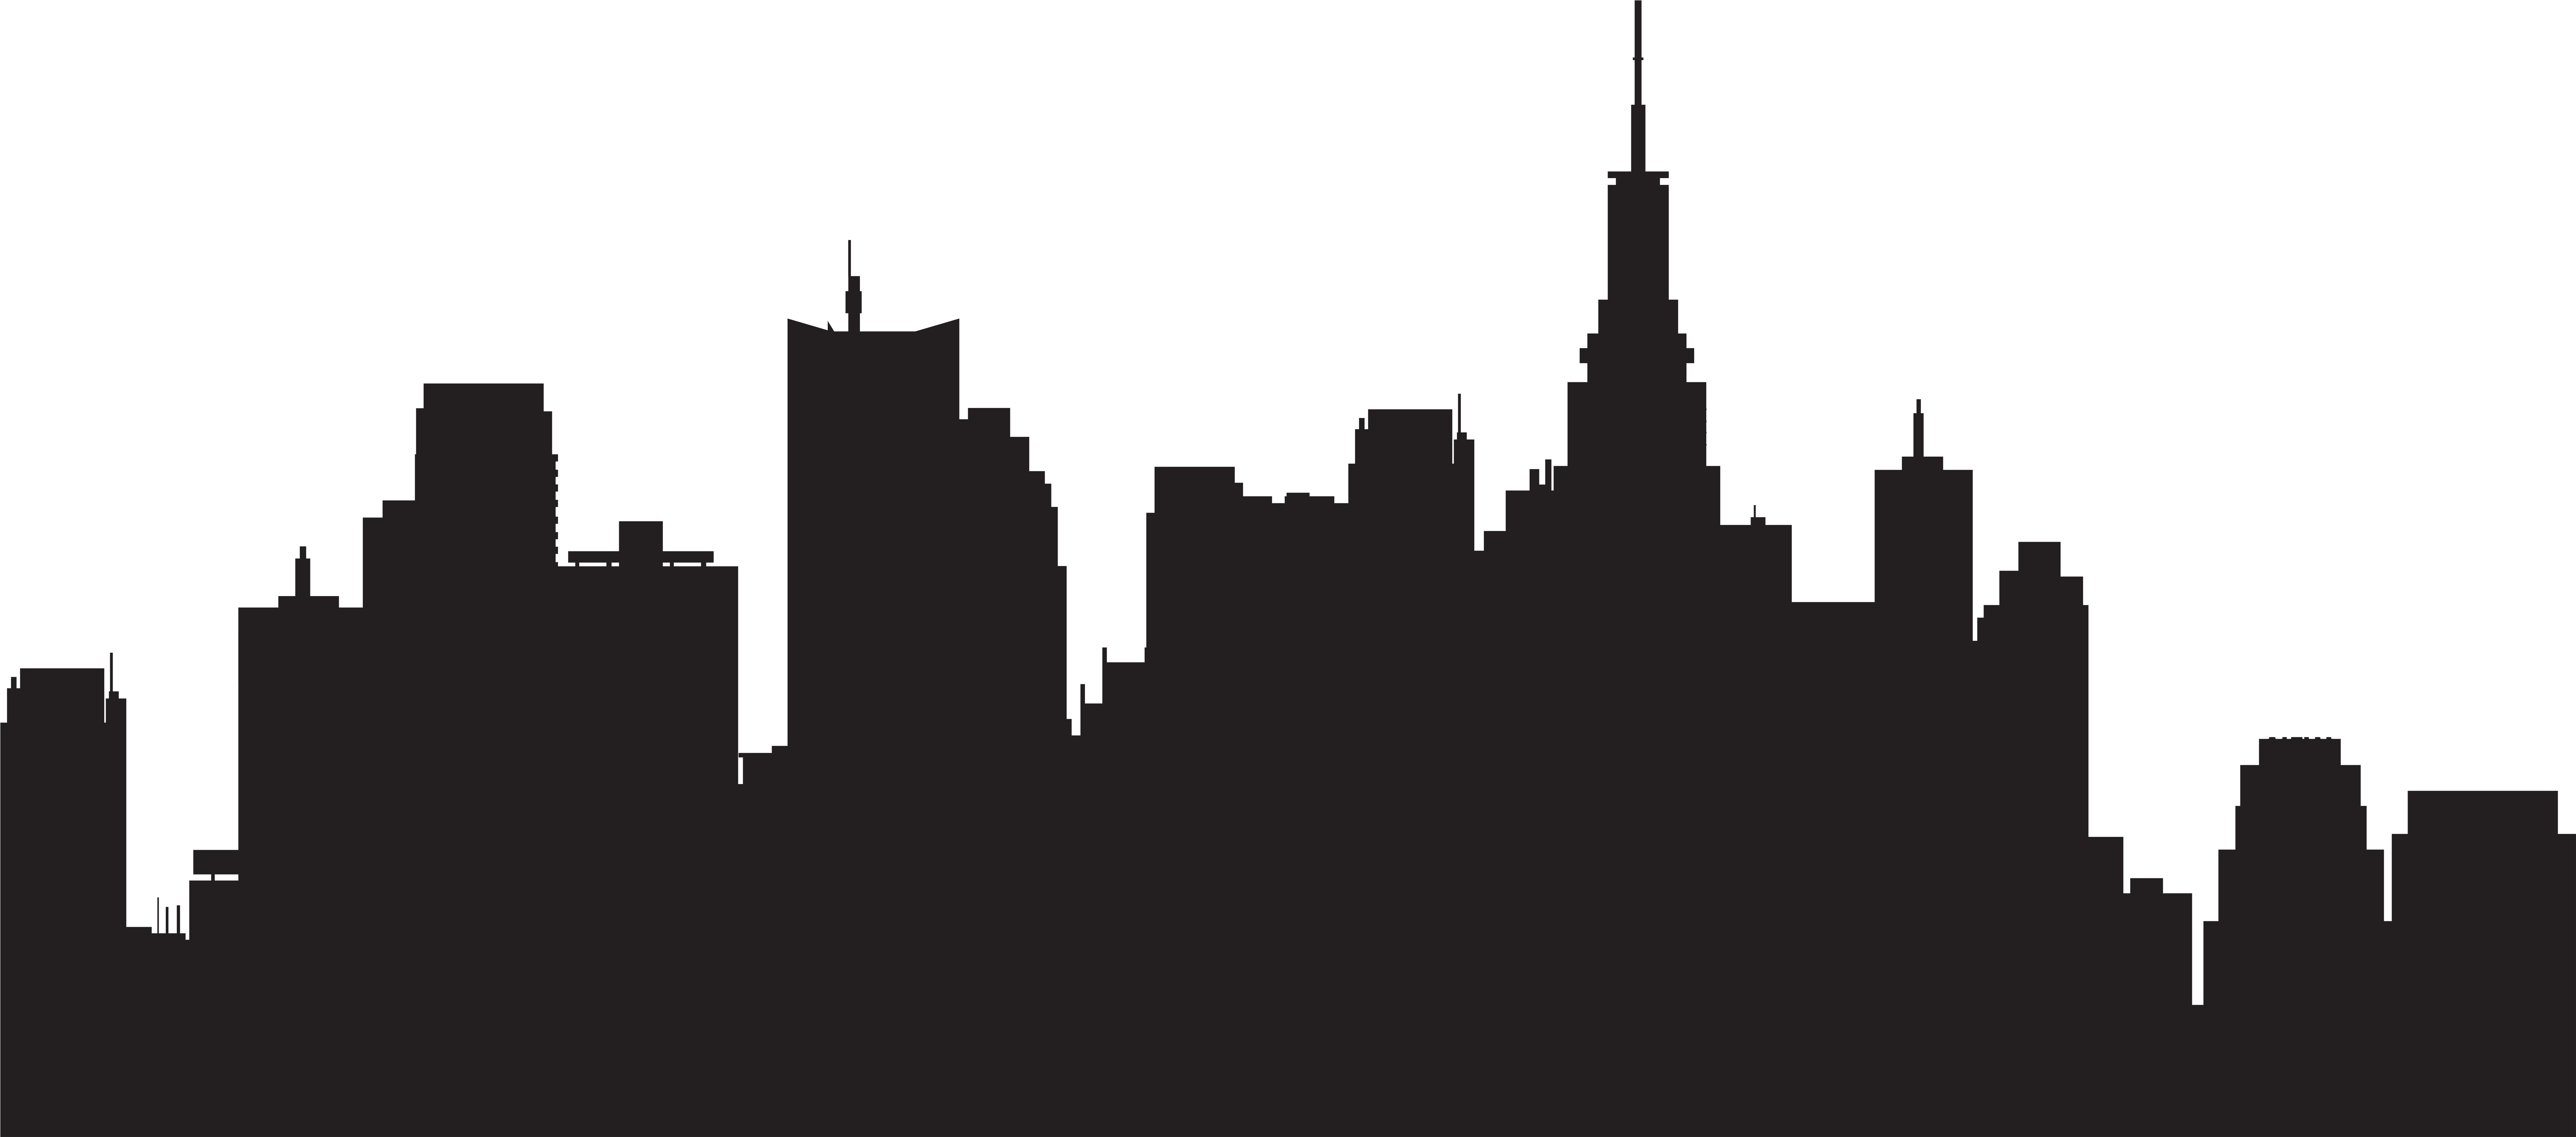 New York City Silhouette Skyline (8001x3531)